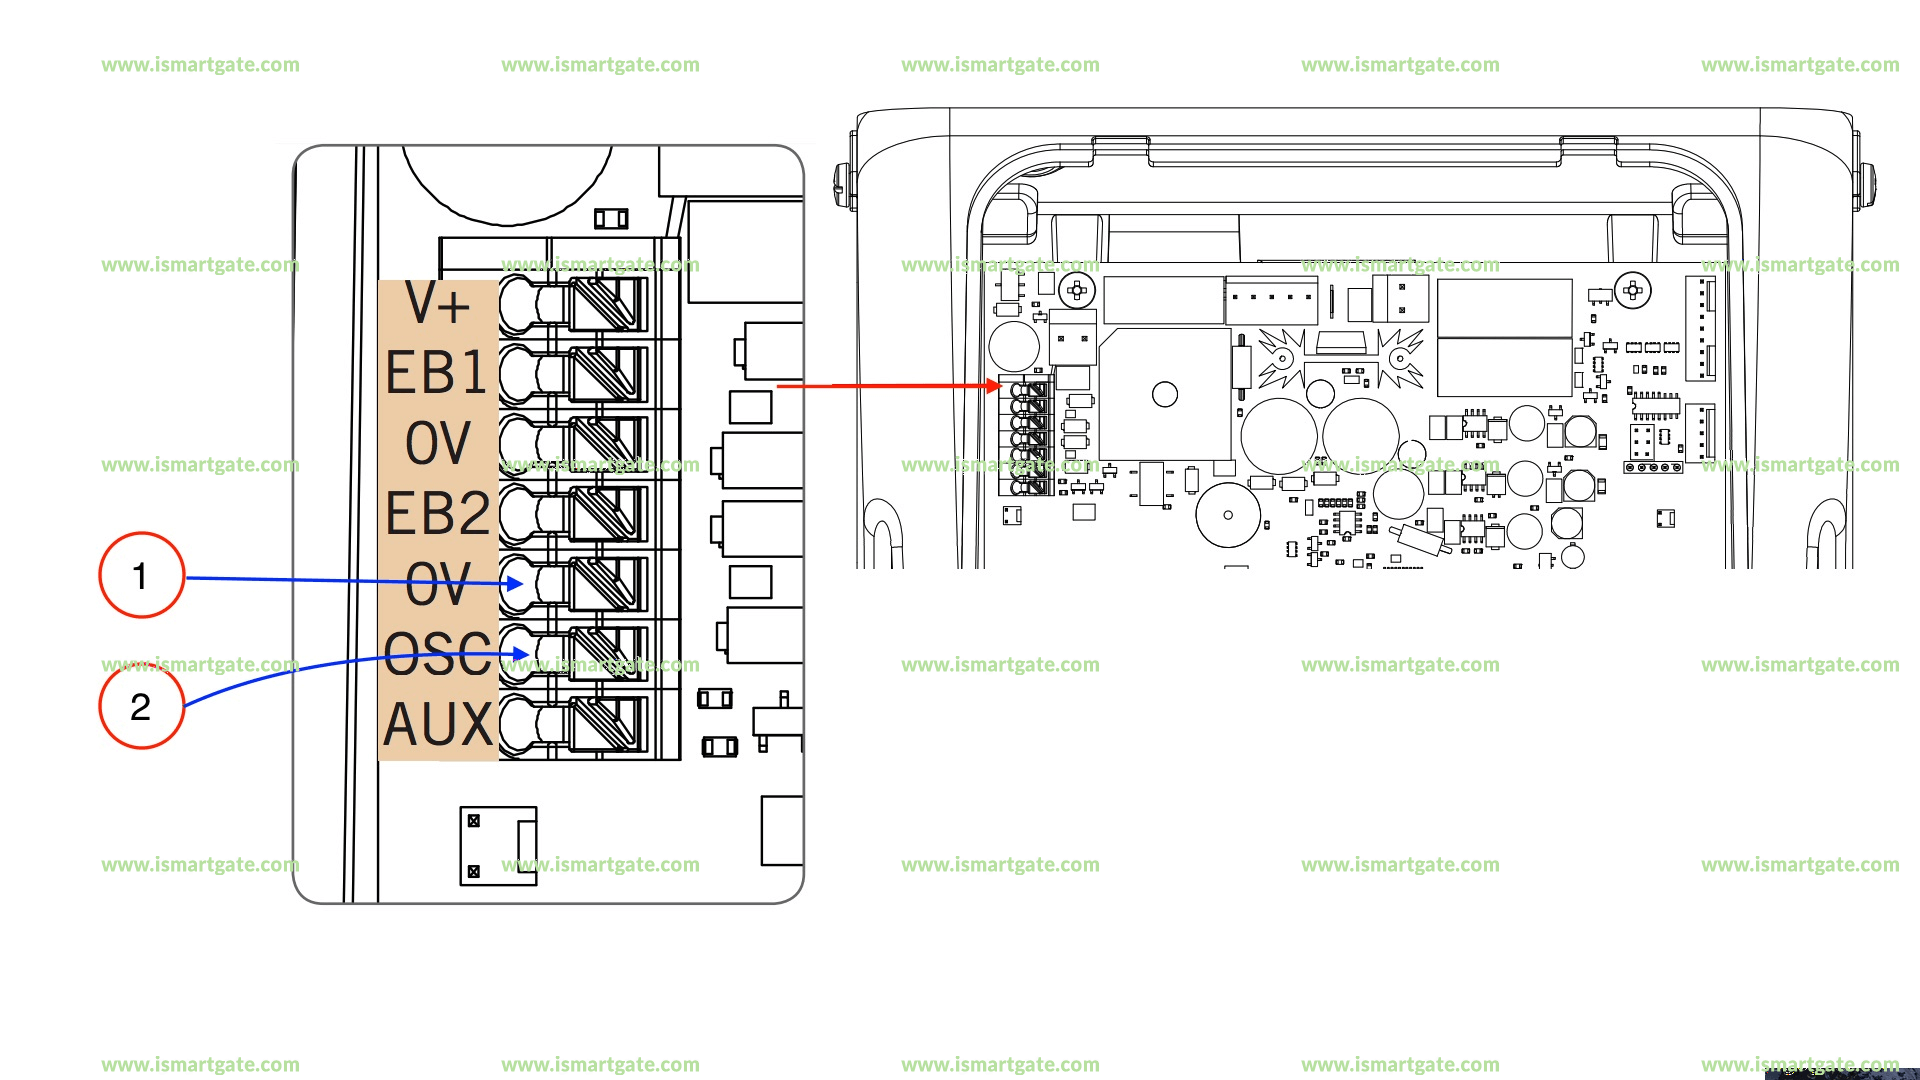 Wiring diagram for B&D SDO-2v2 ADV